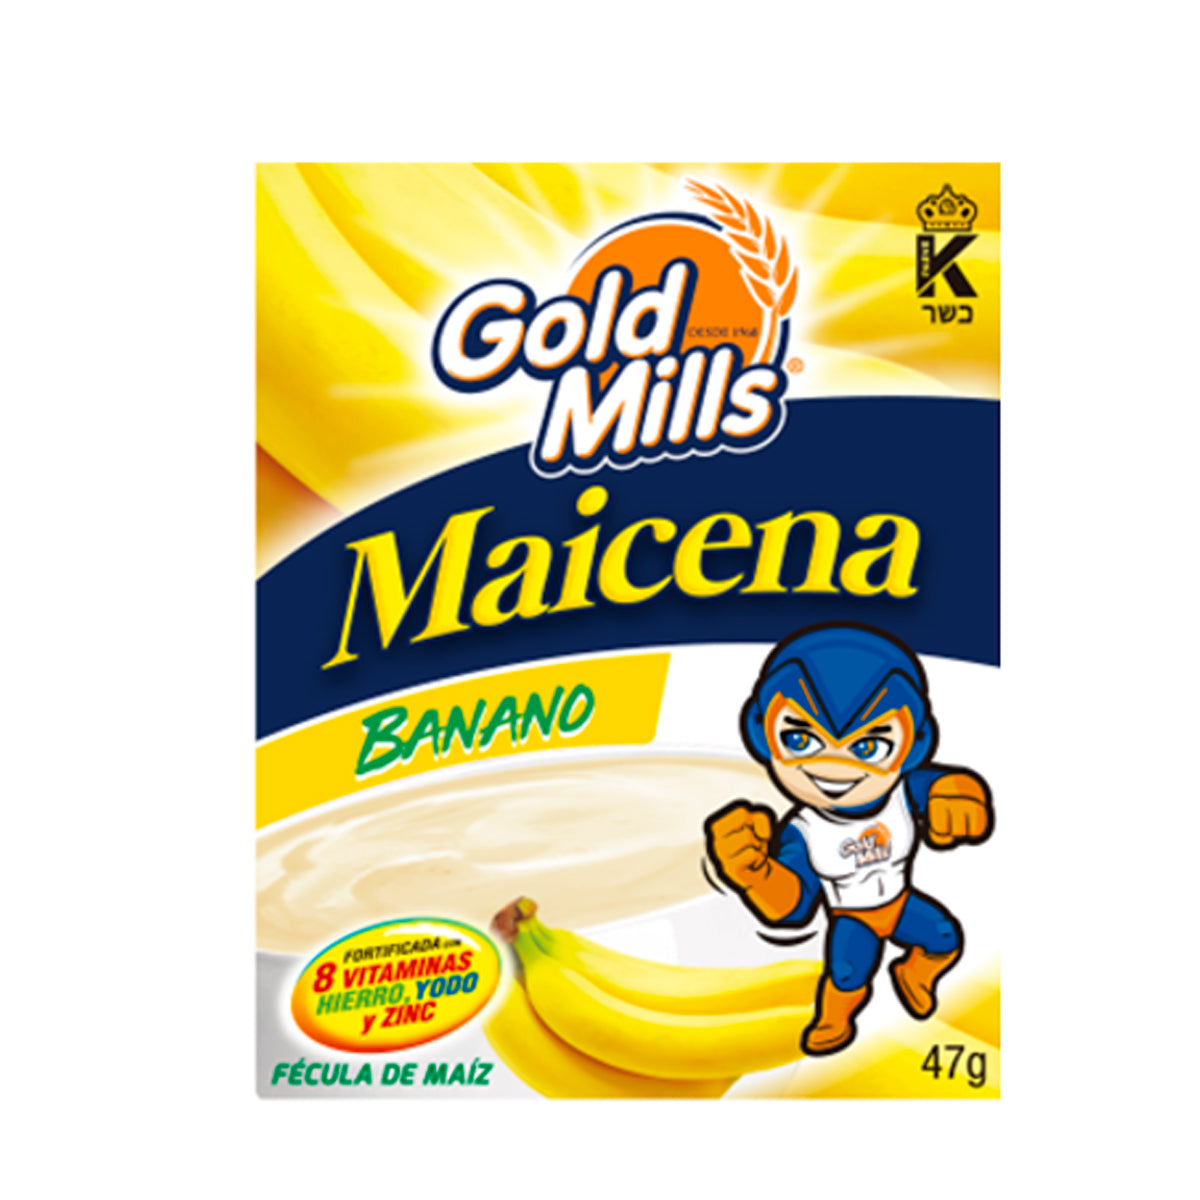 Maicena Banano GM 48/47g